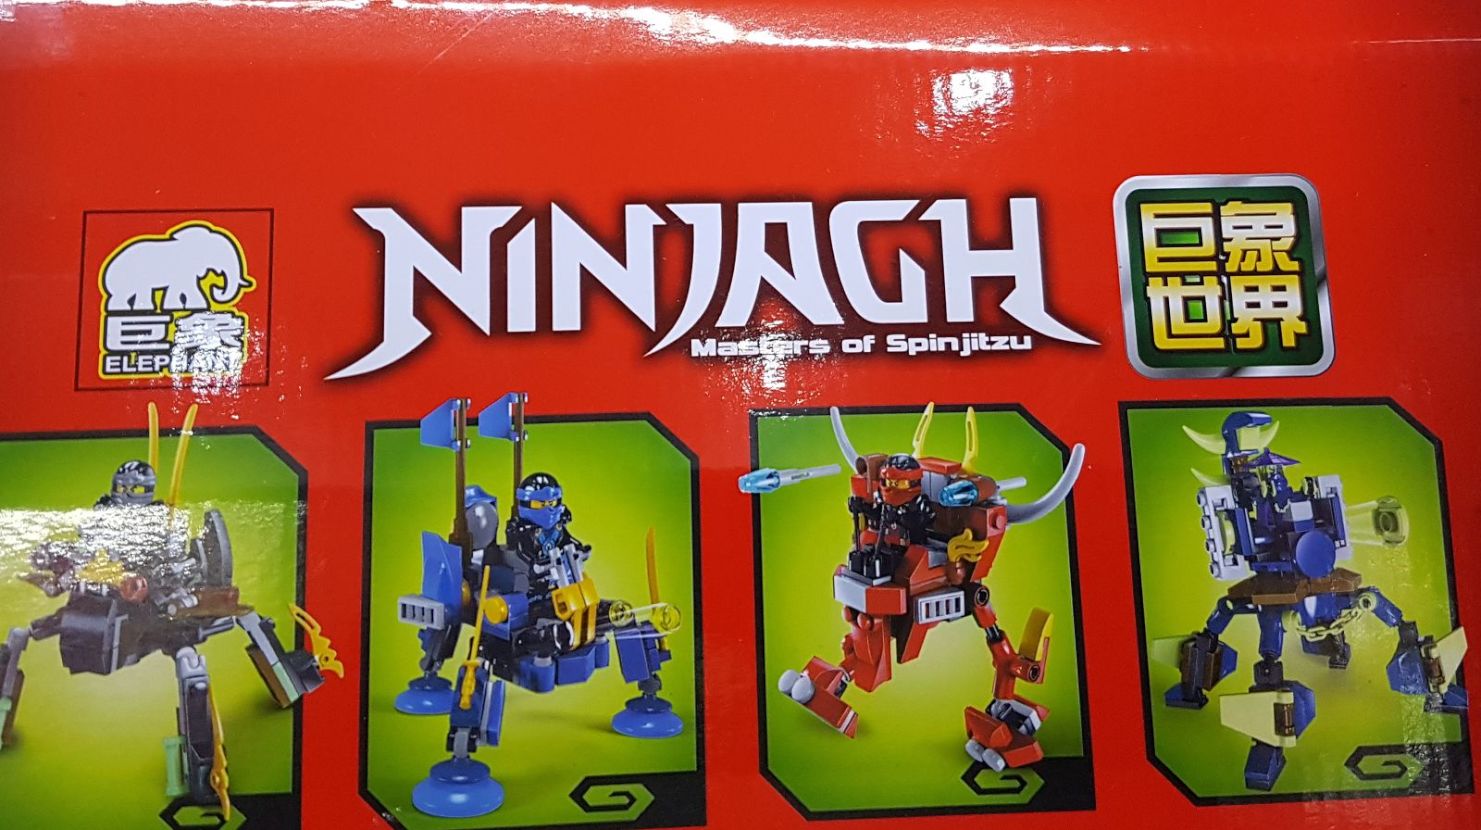 Ninjagh